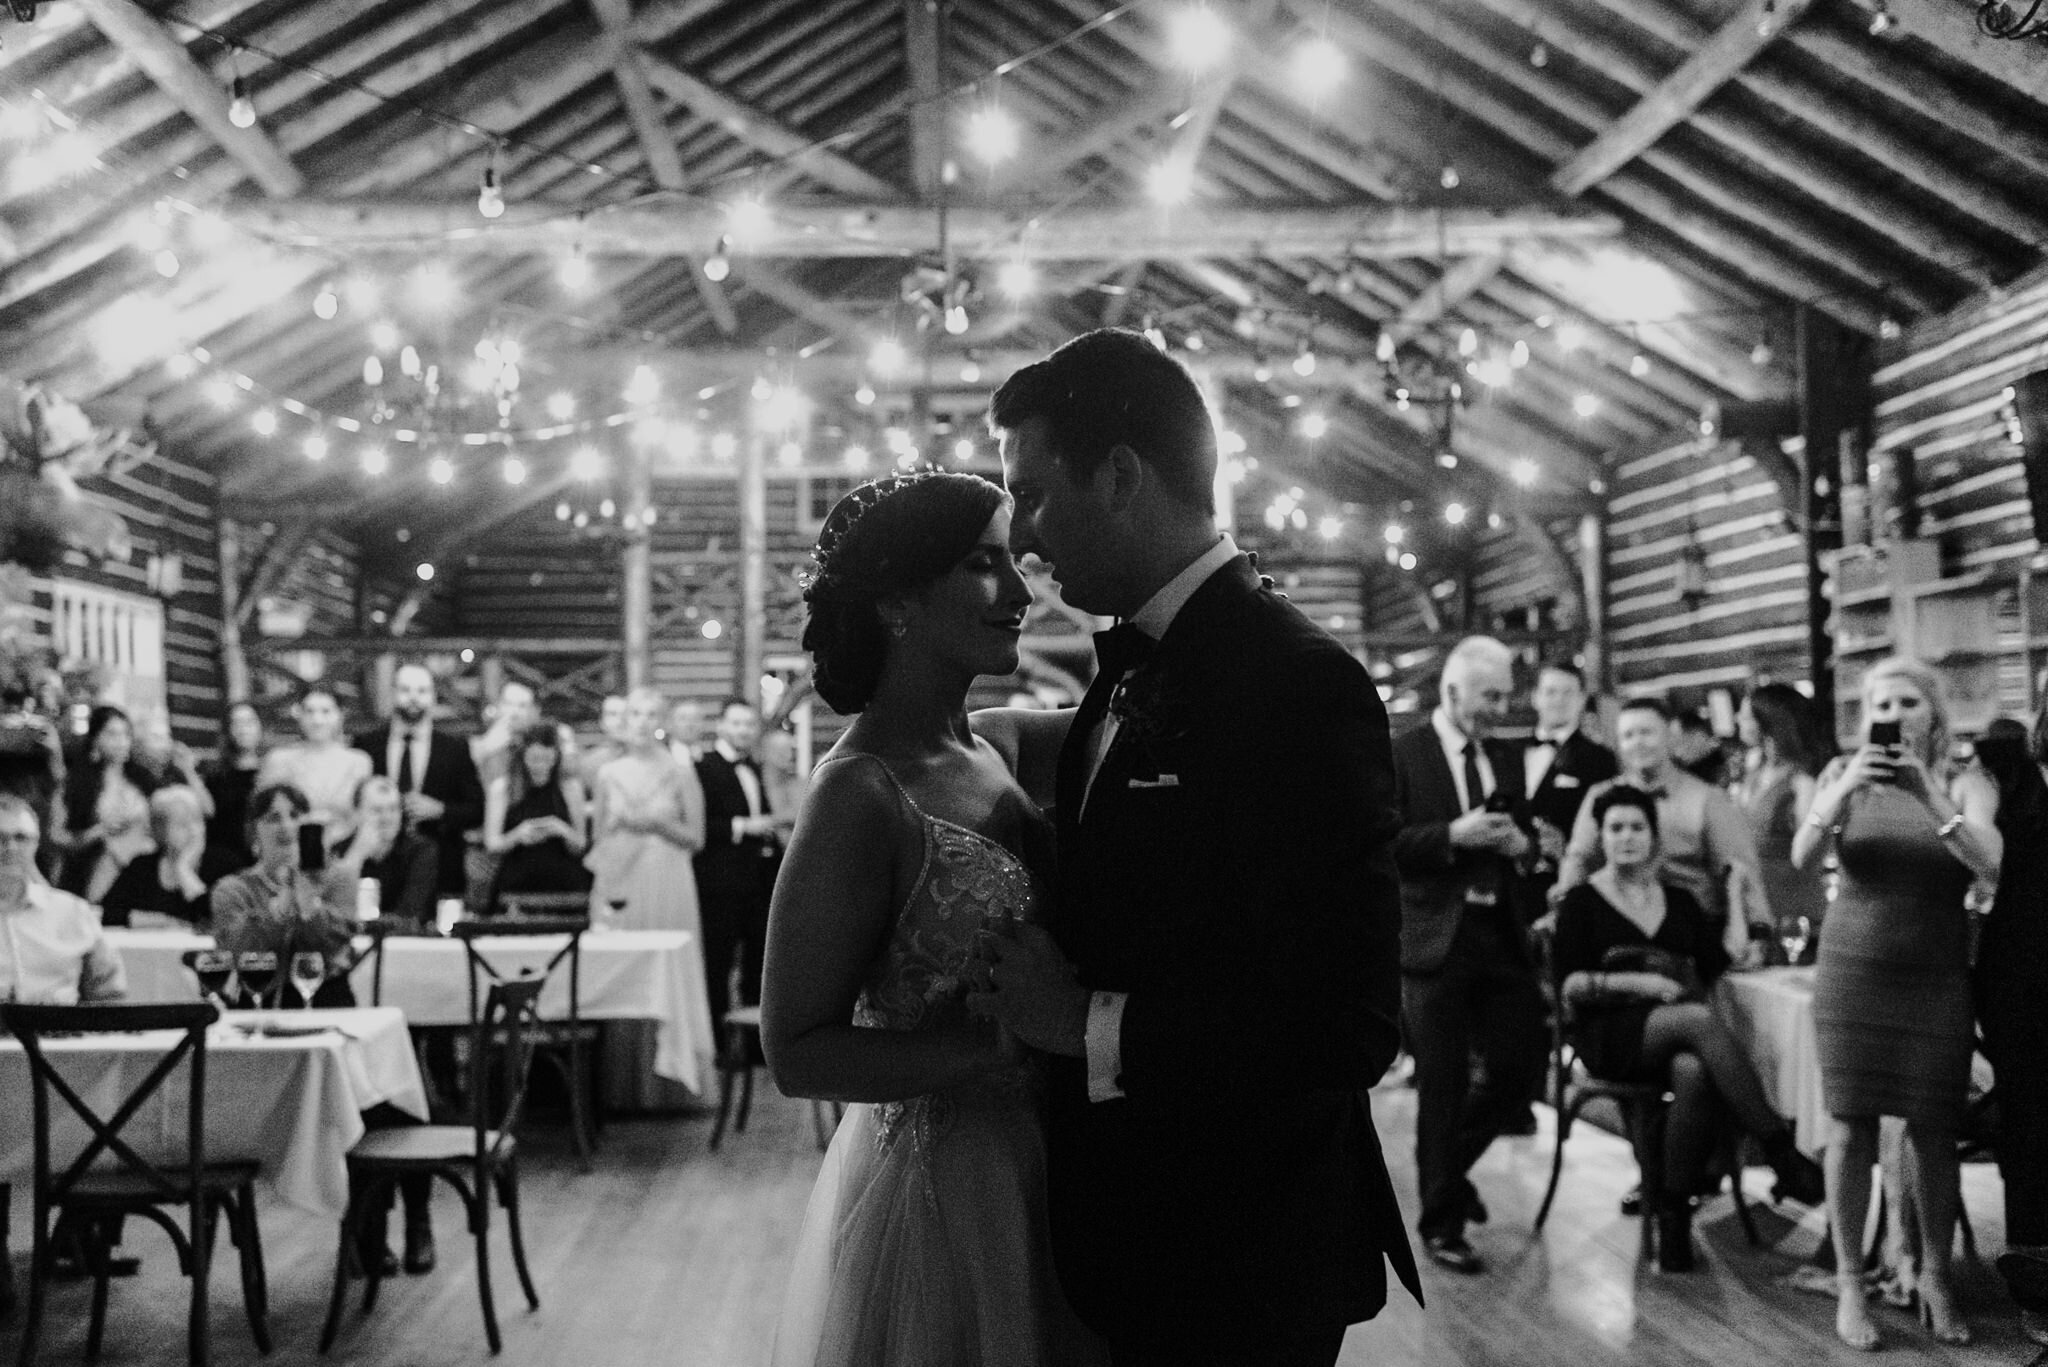 264-first-dance-wedding-string-lights-documentary-toronto-halifax.jpg